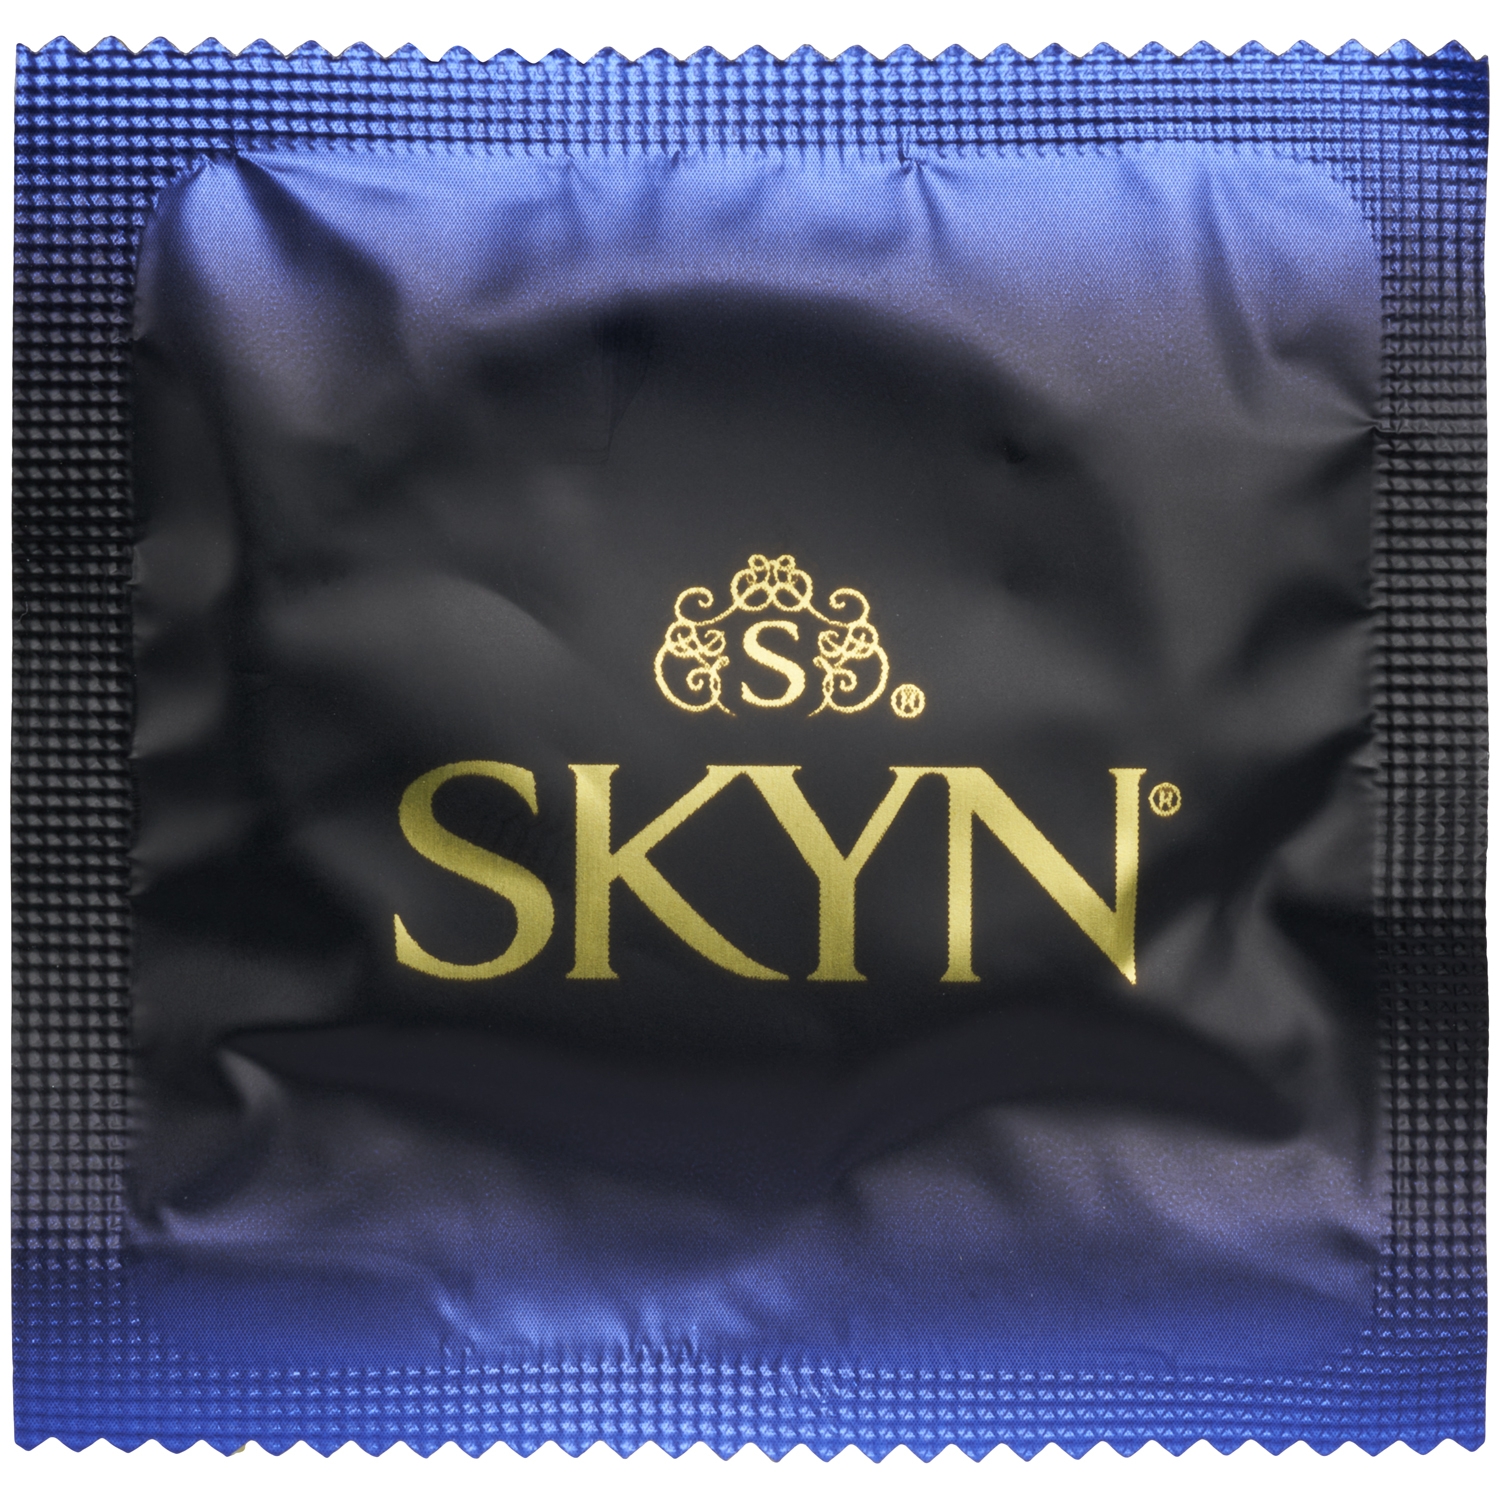 Skyn Elite Latexfri Kondomer 20 stk